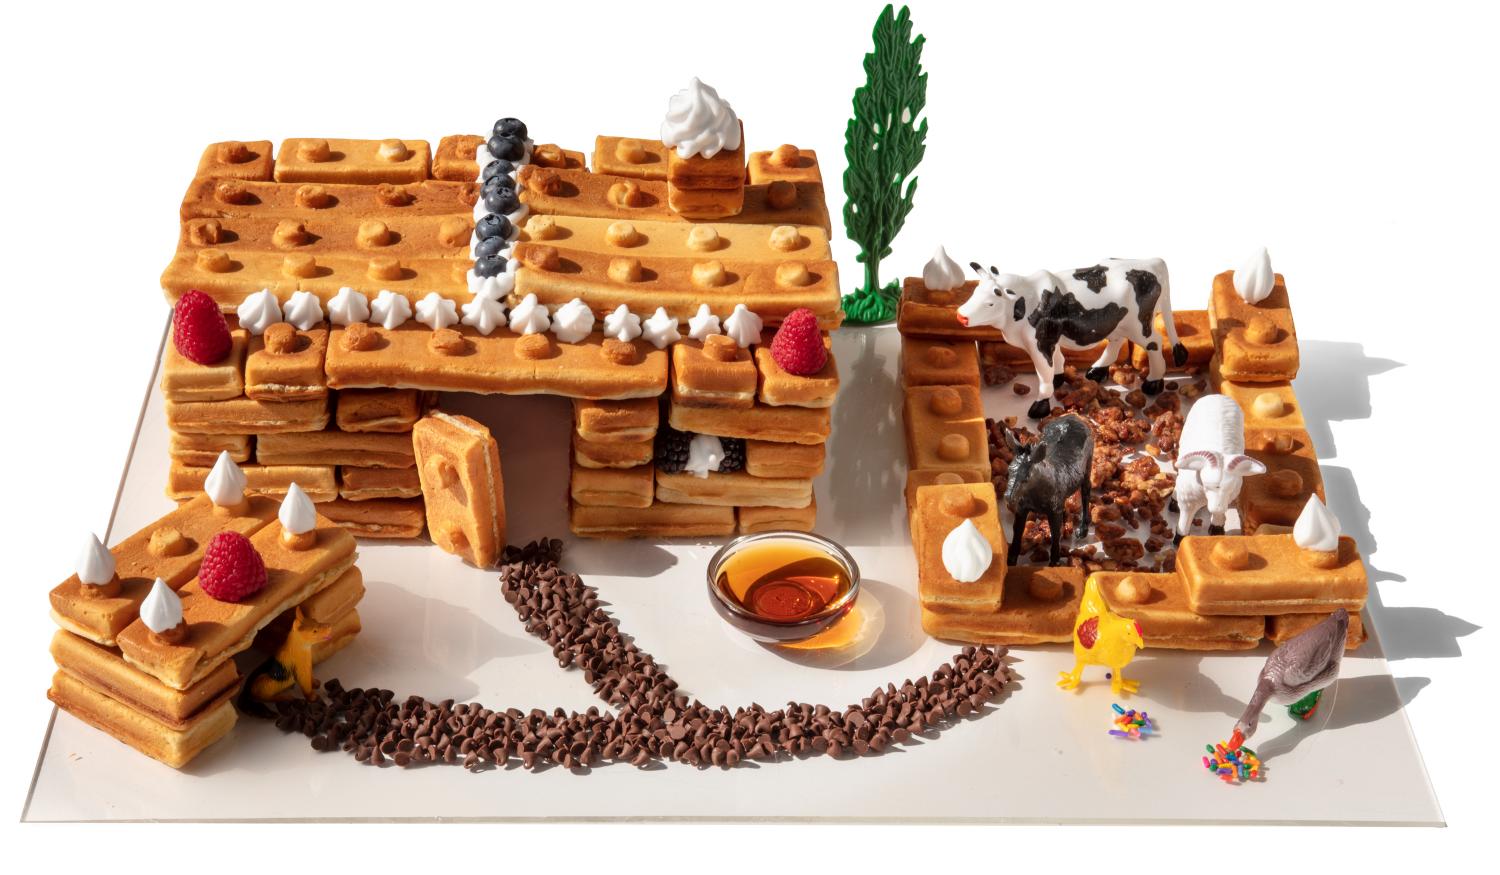 Building Block Waffle Maker - LEGO-Like Waffle Maker